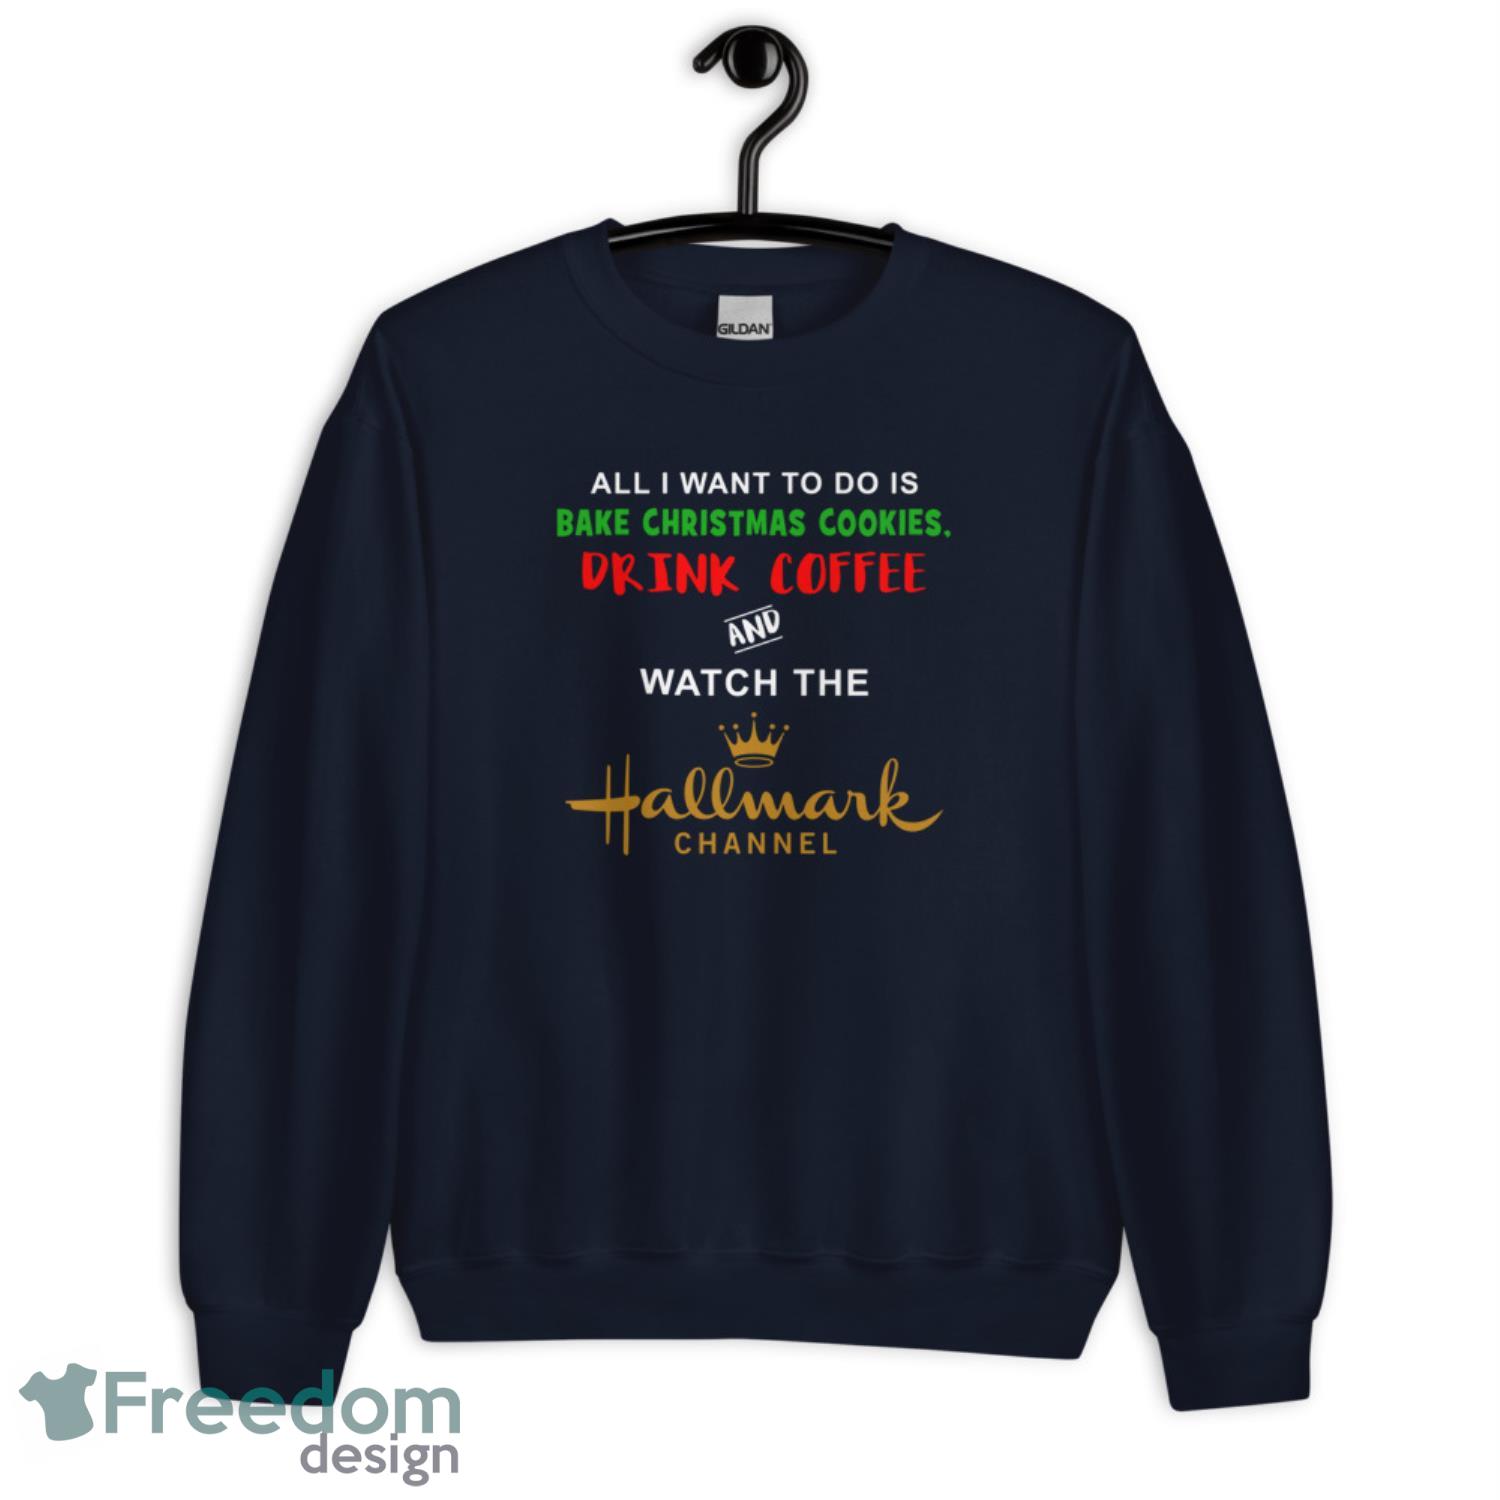 All I Want To Do Is Bake Christmas Cookies And Watch The Hallmark Christmas Sweater - G185 Crewneck Sweatshirt-1